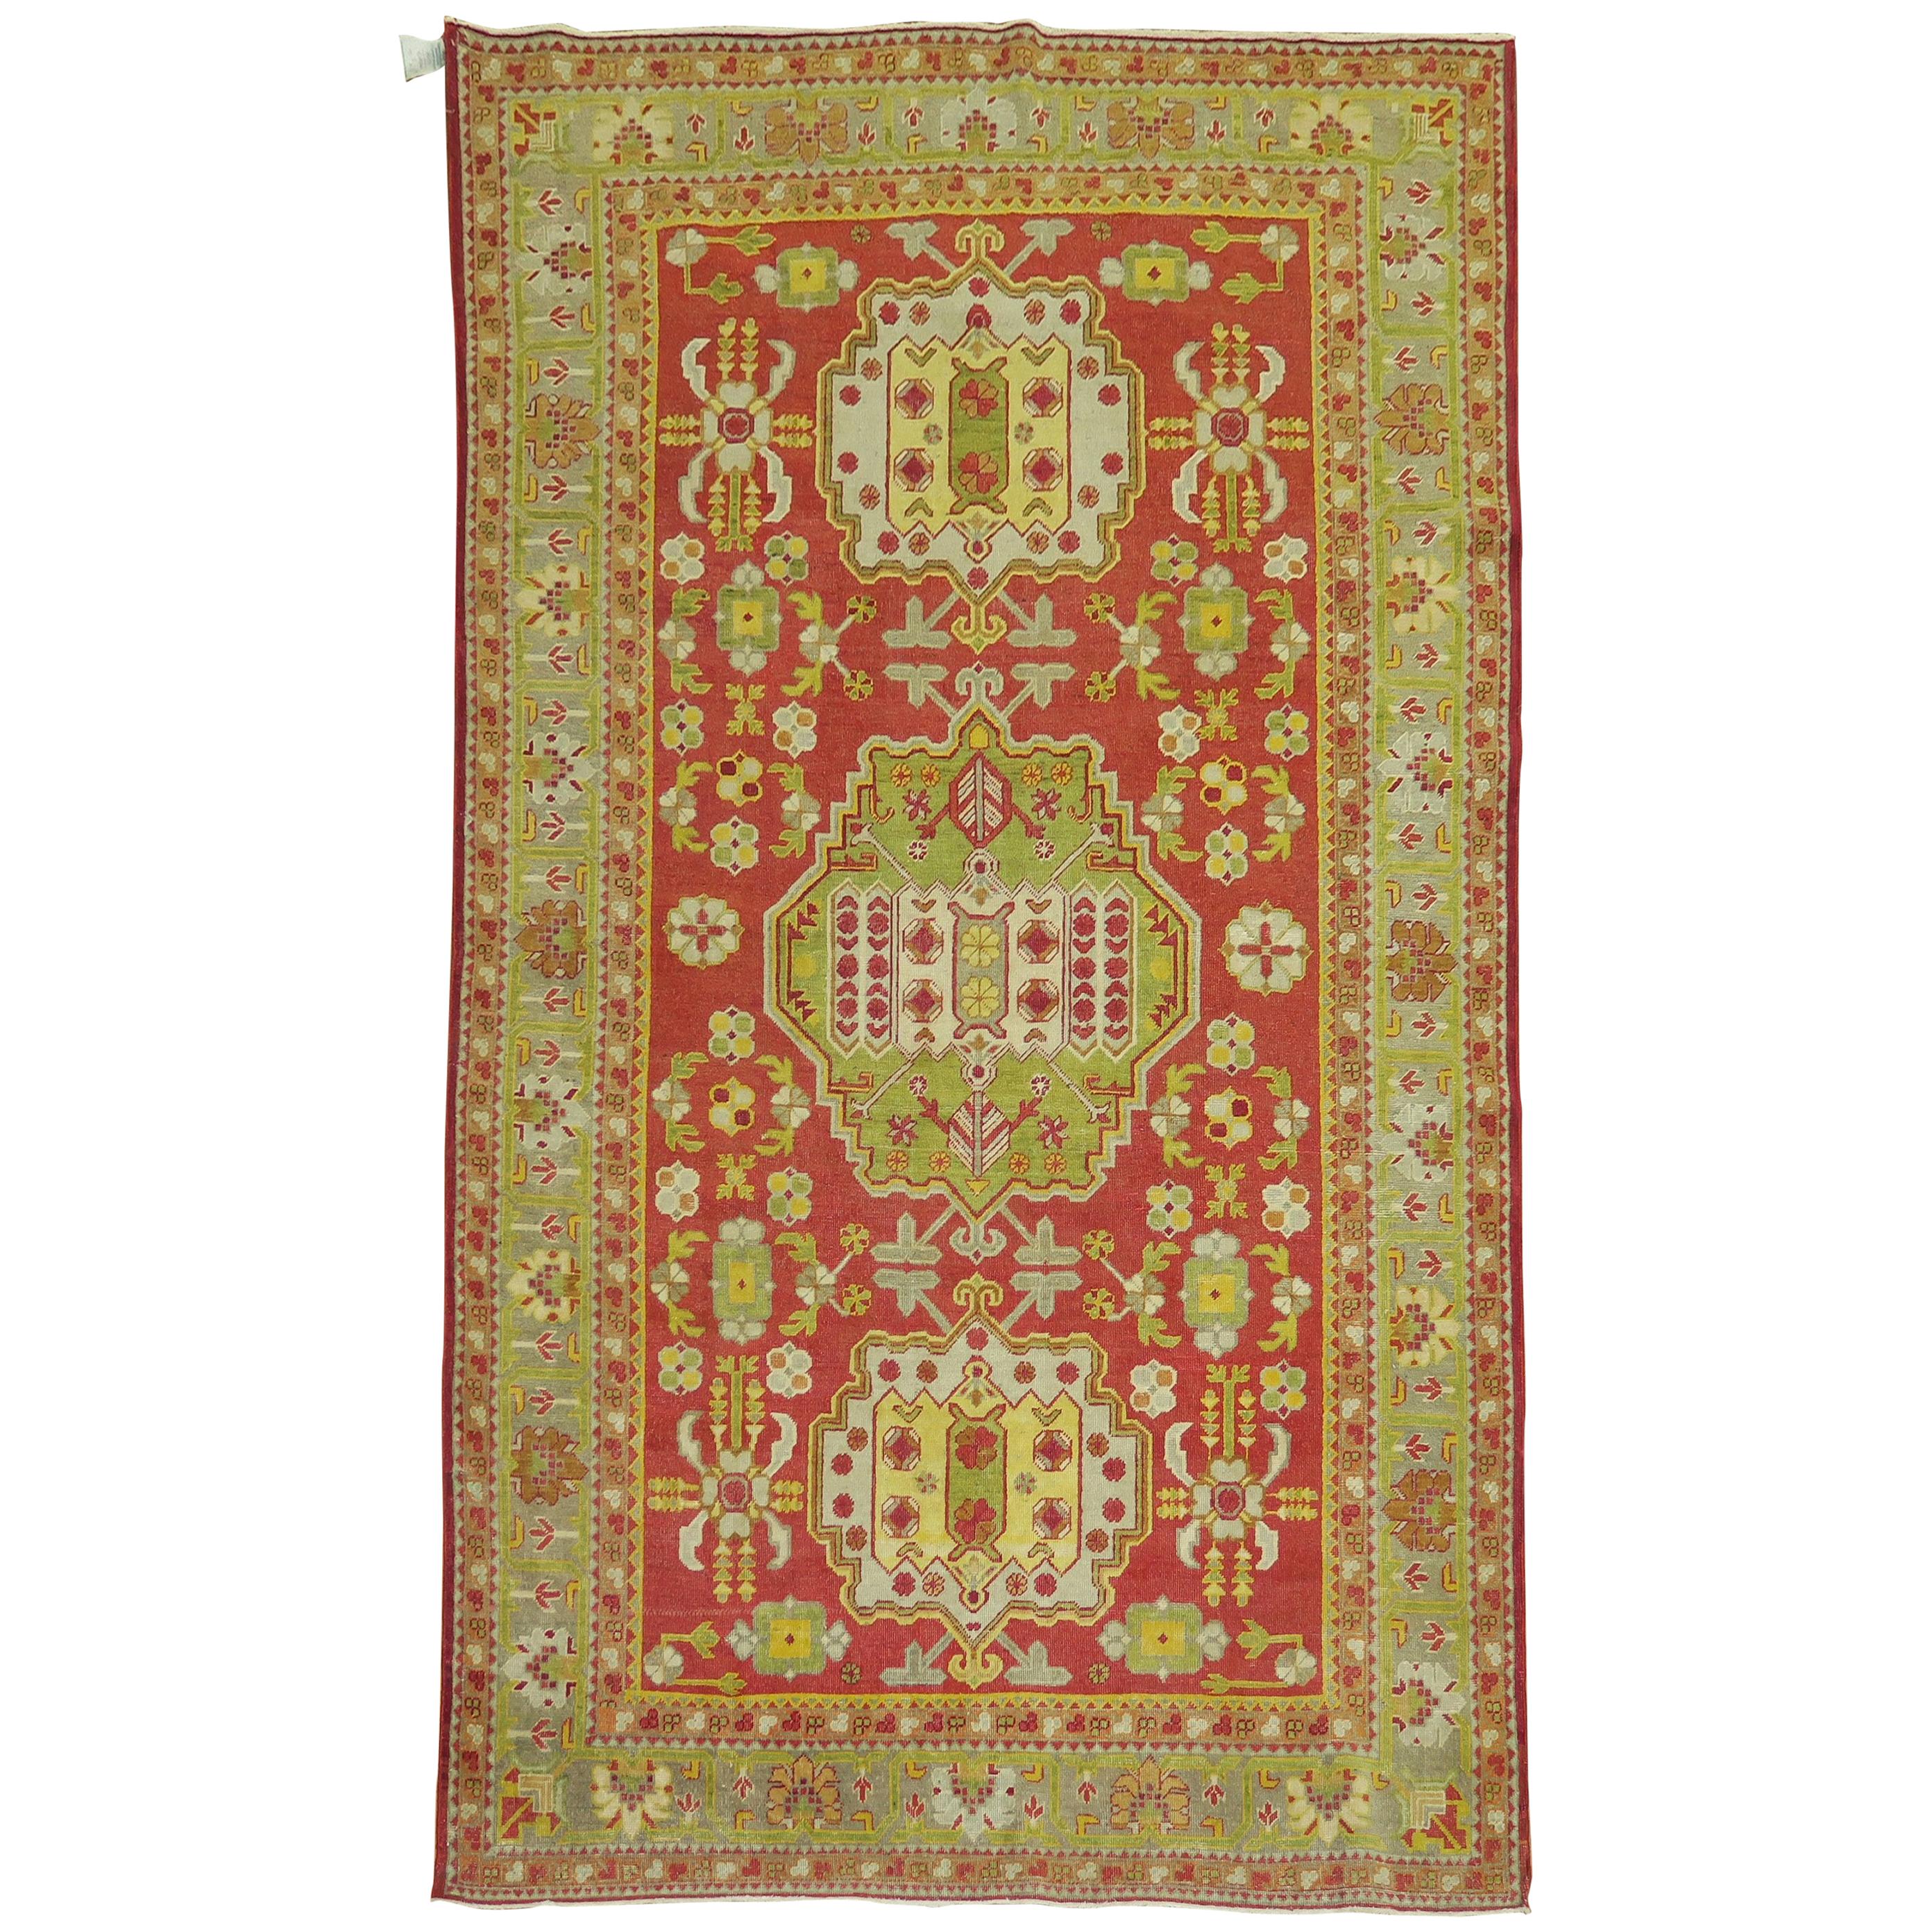 Khotan Bright Red Green Yellow Antique 20th Century Wool Handmade Oriental Rug